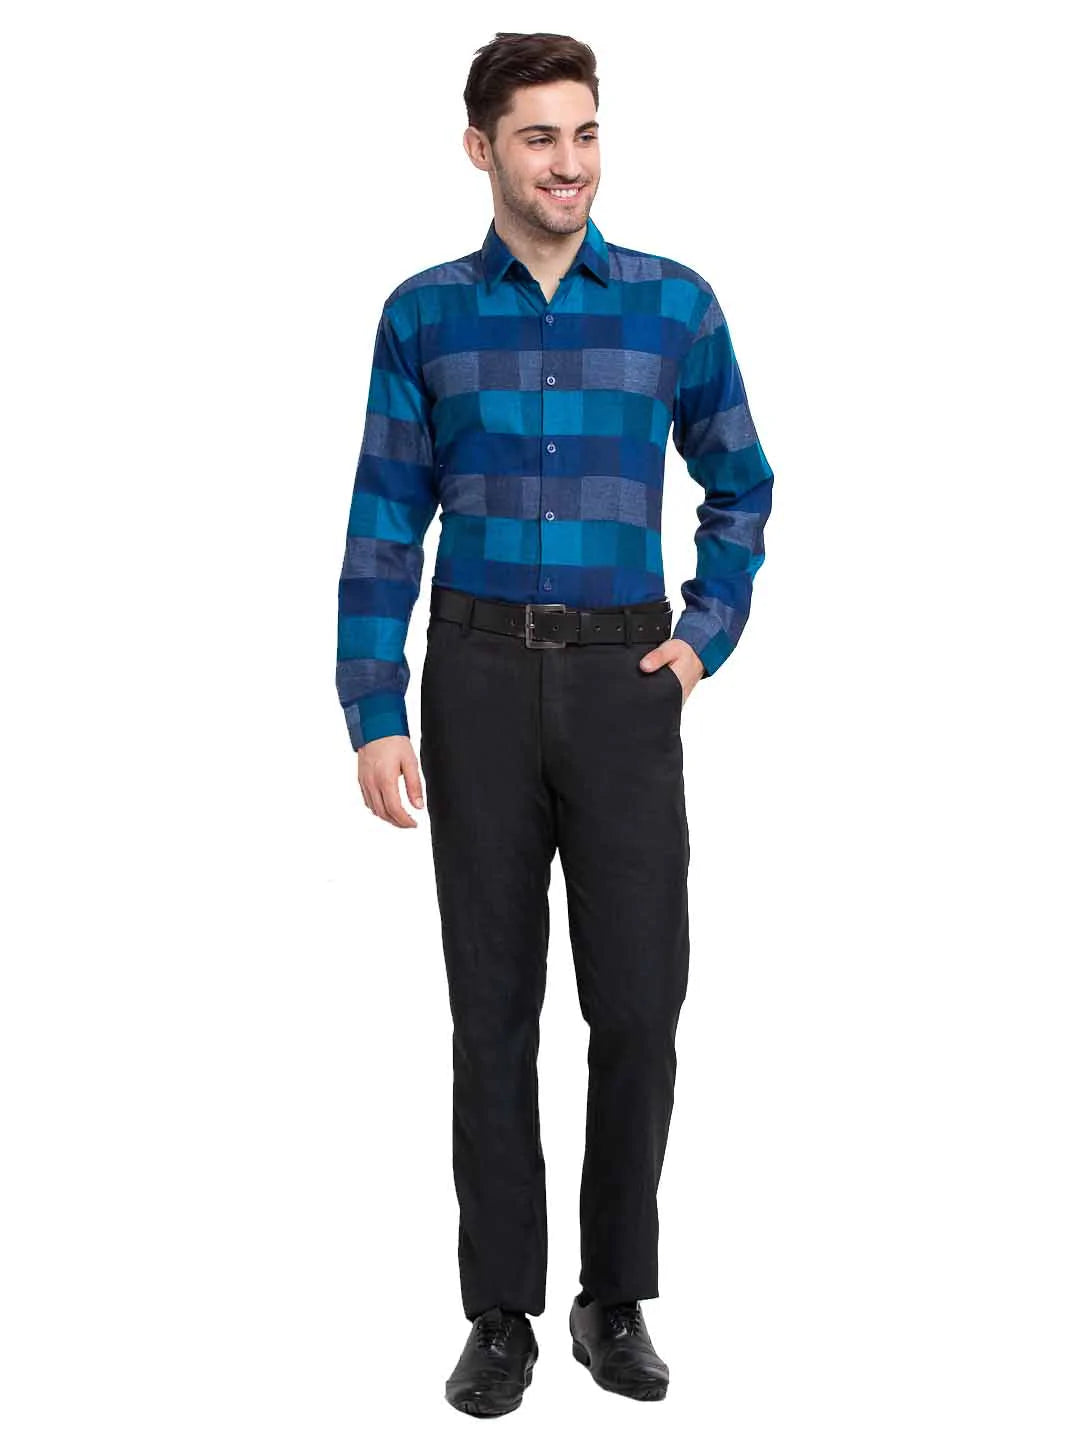 Jainish Blue Men's Checked Cotton Formal Shirt ( SF 787Blue )